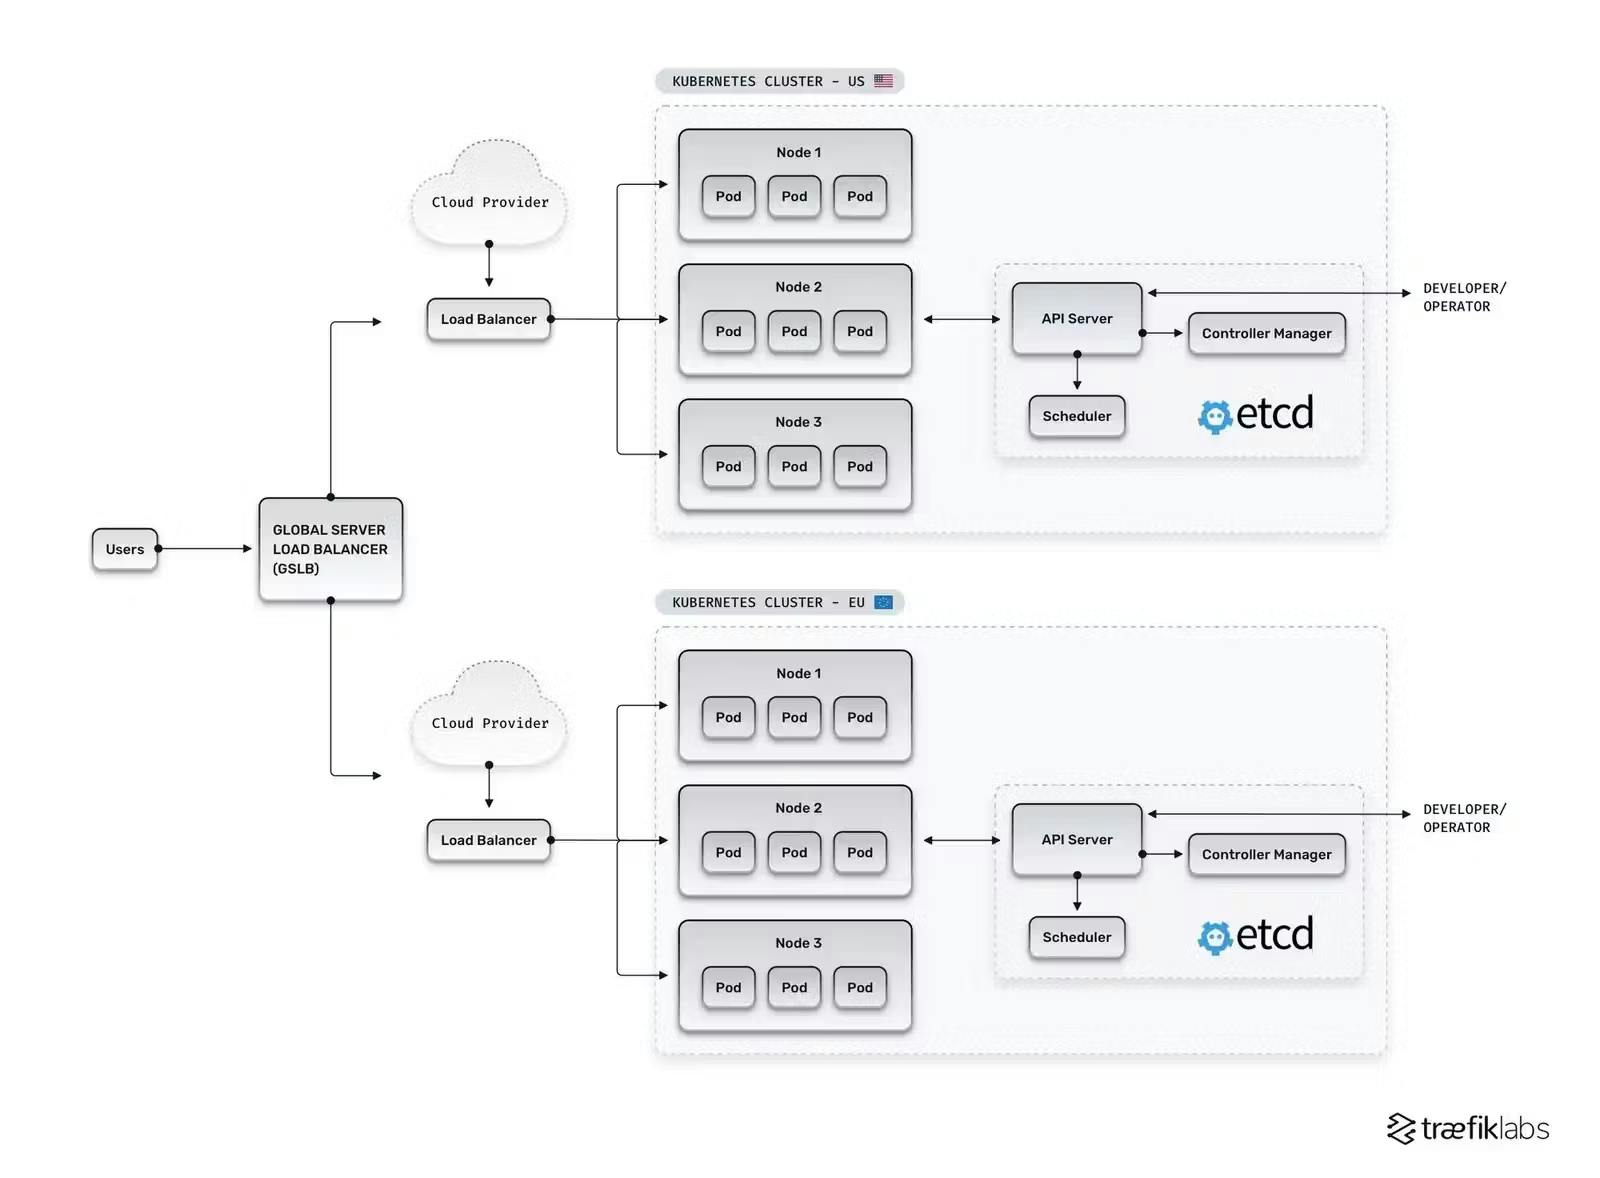 Architecture of Kubernetes multi-cluster. Source:https://traefik.io/glossary/understanding-multi-cluster-kubernetes/